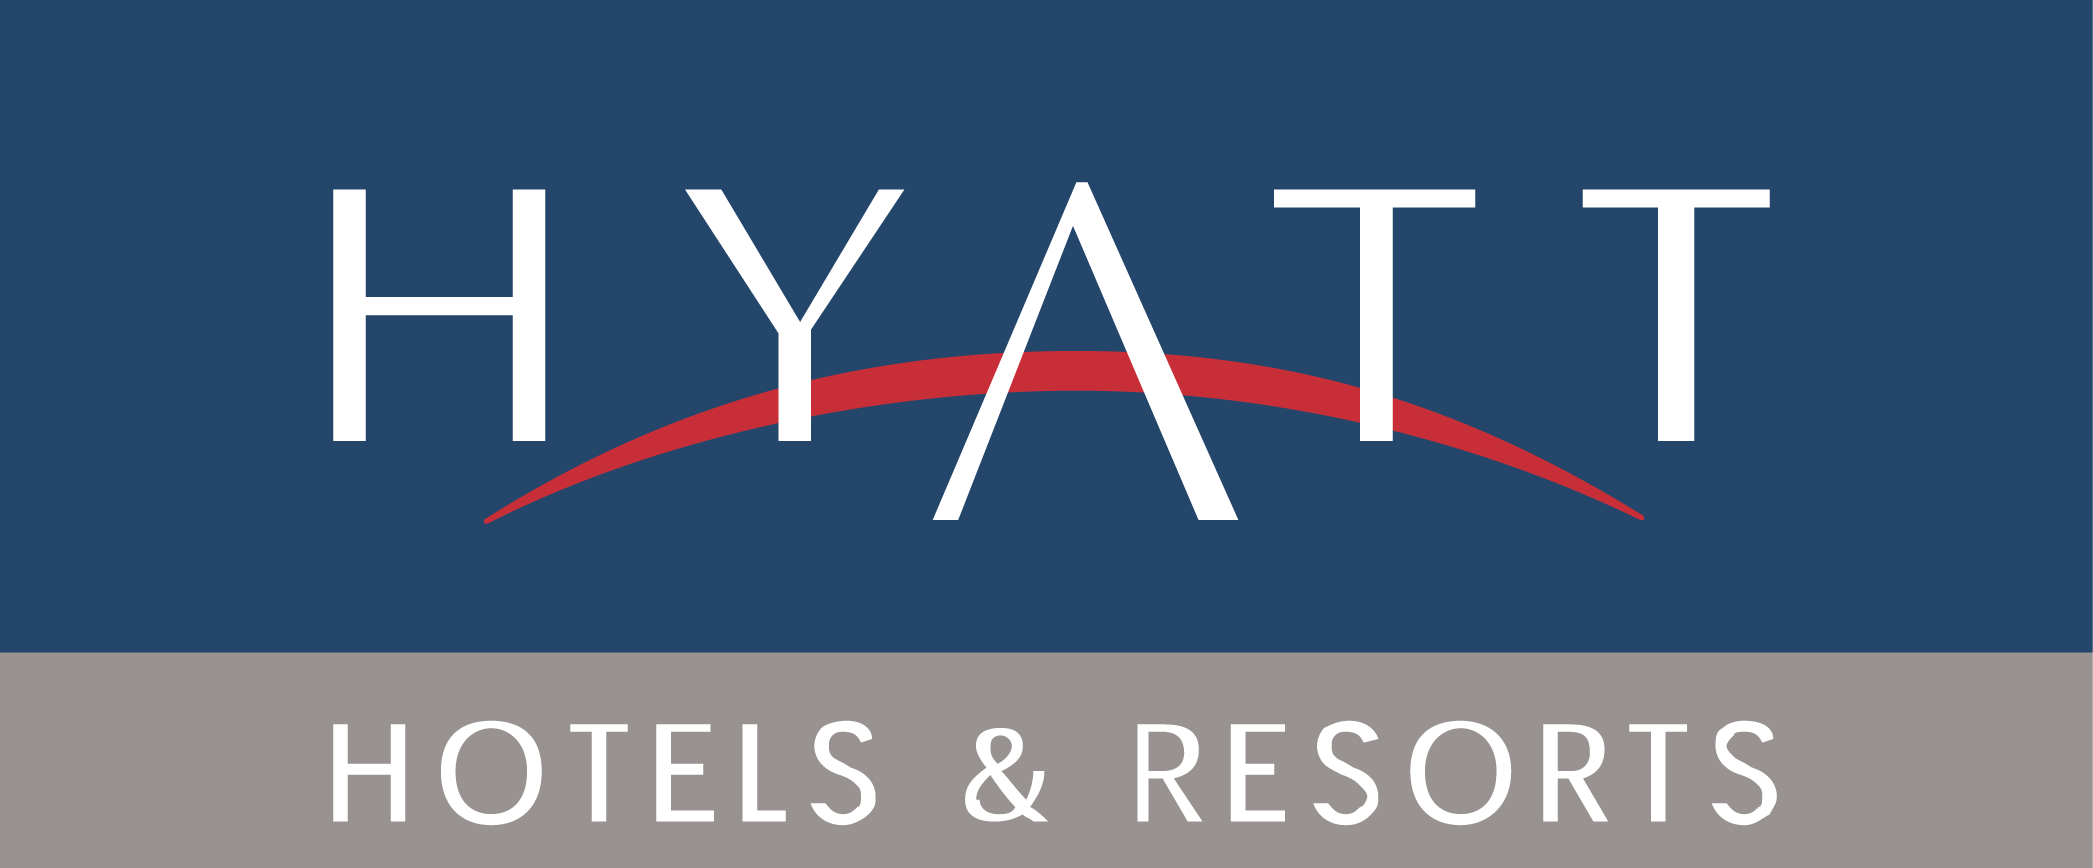 Hyatt Hotels and Resorts